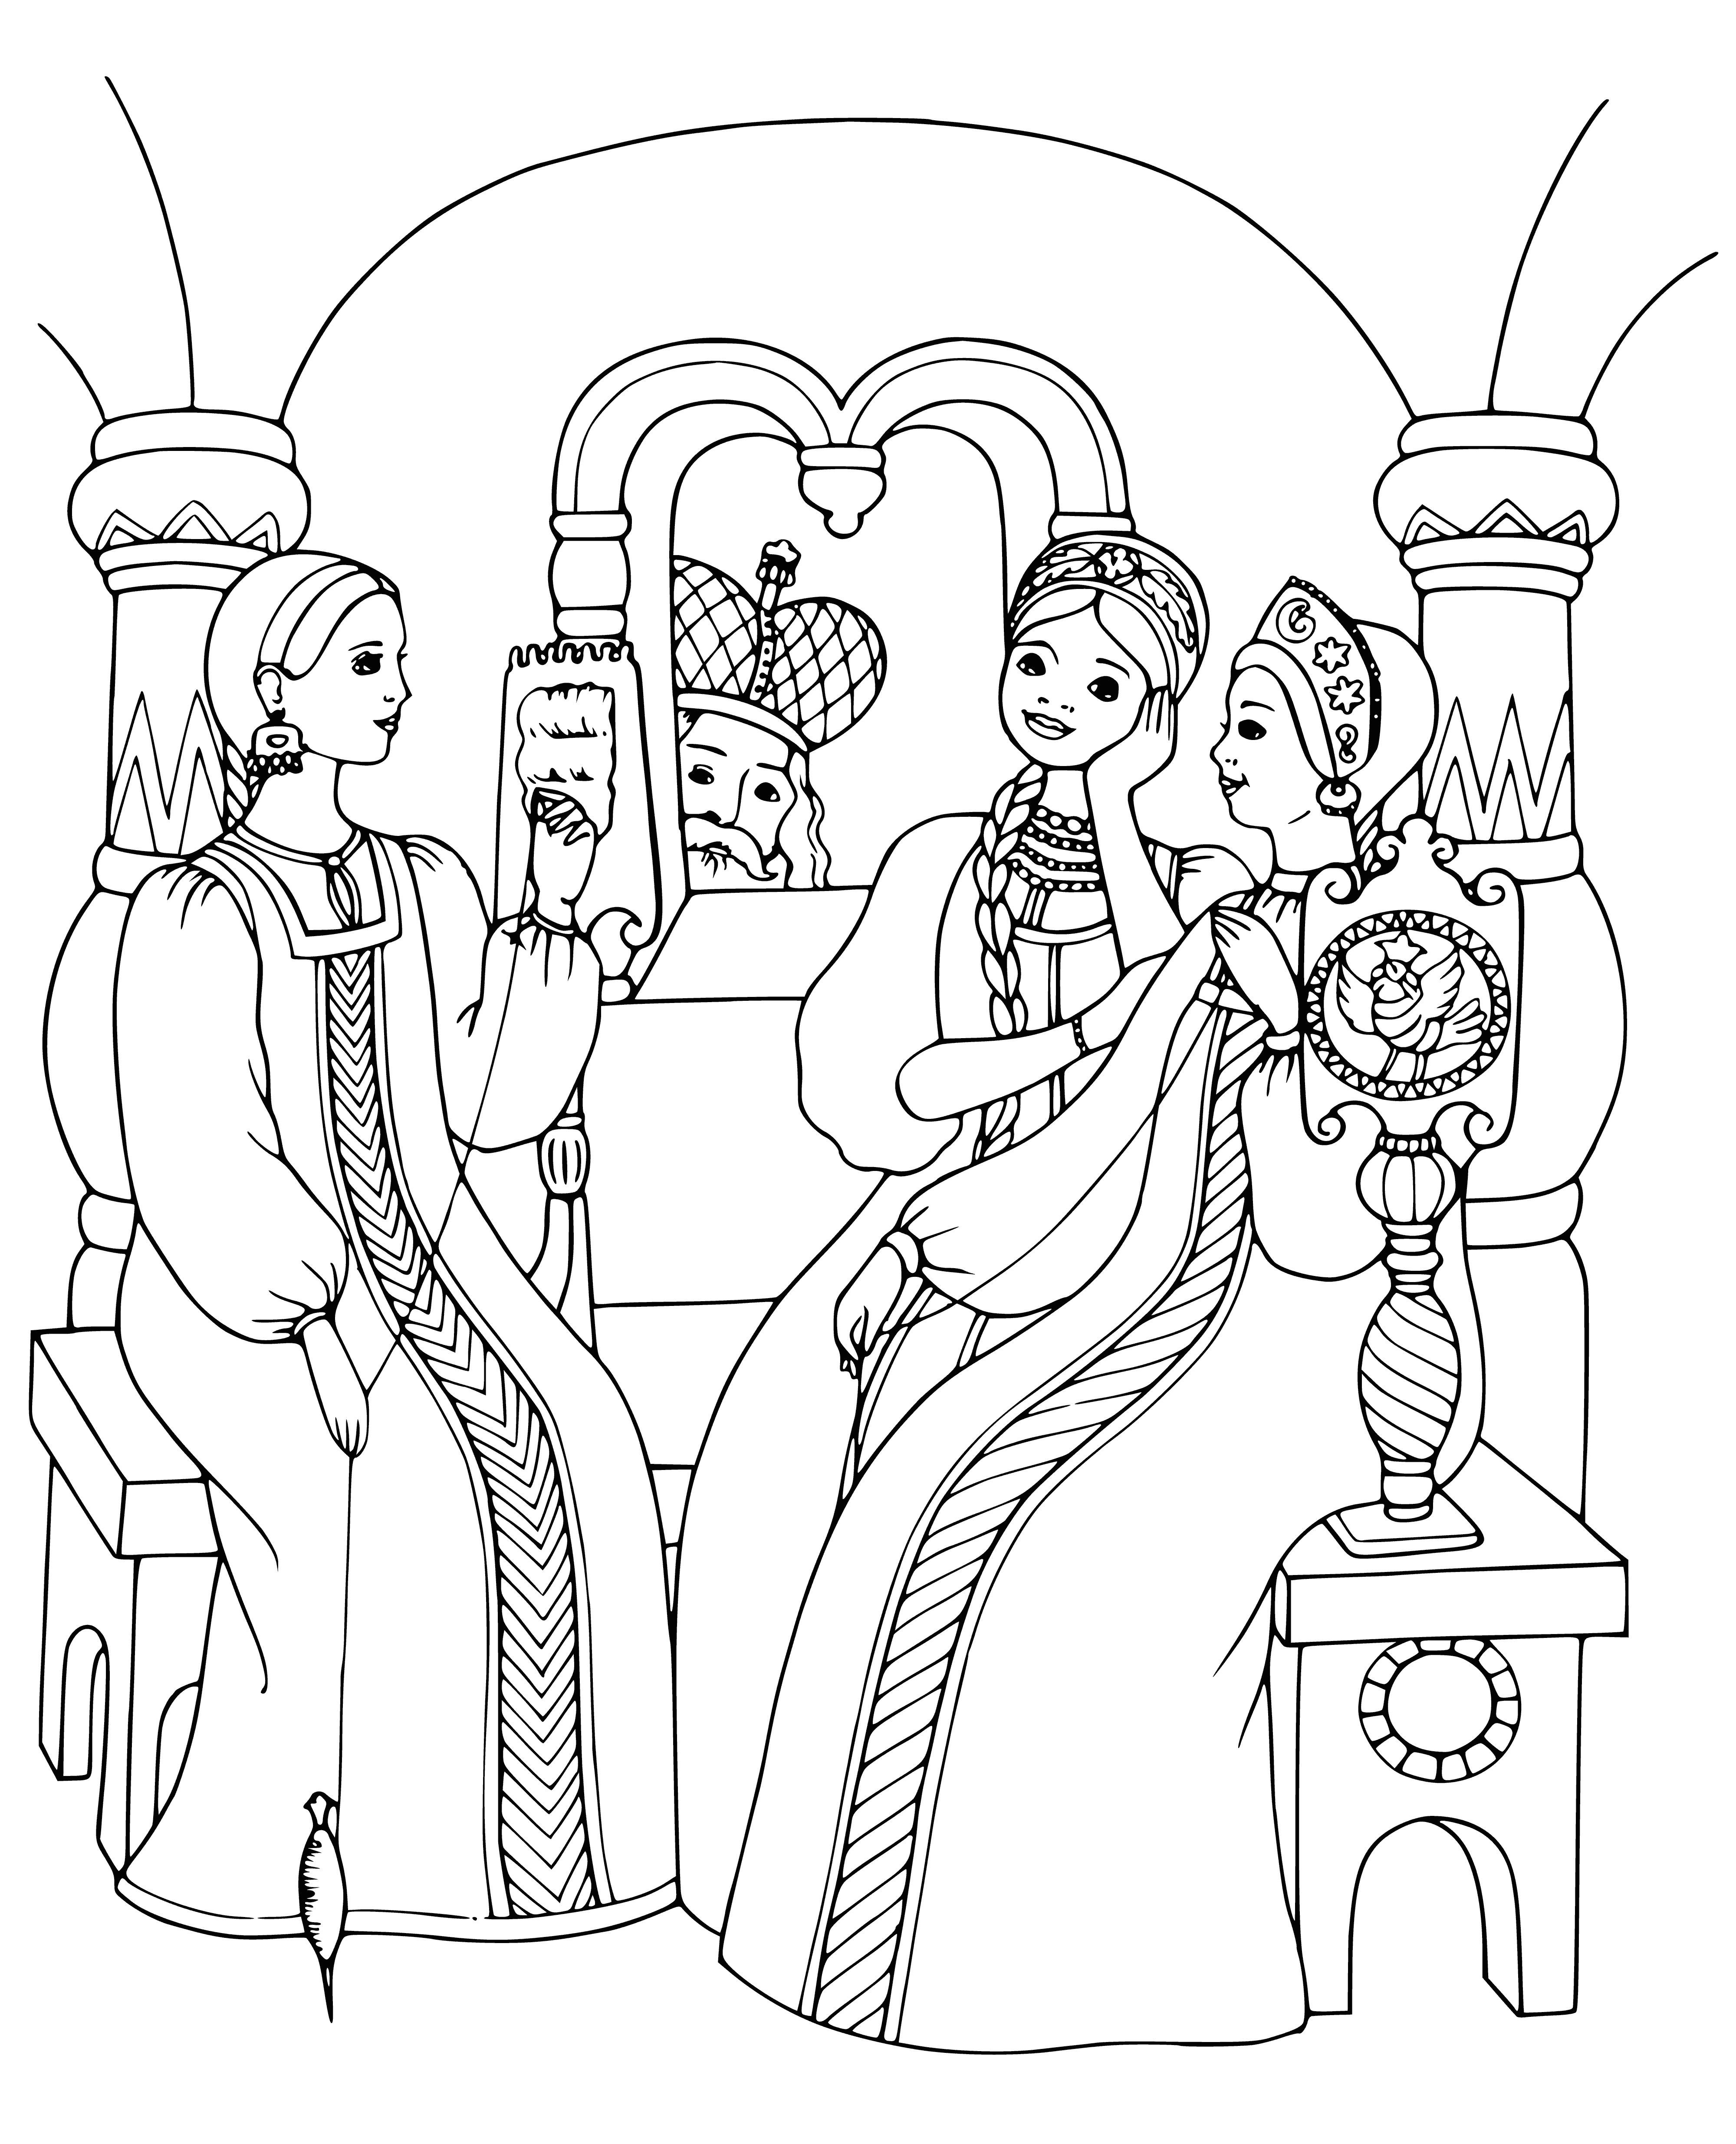 Иллюстрации к сказке о царе Салтане Пушкина раскраски